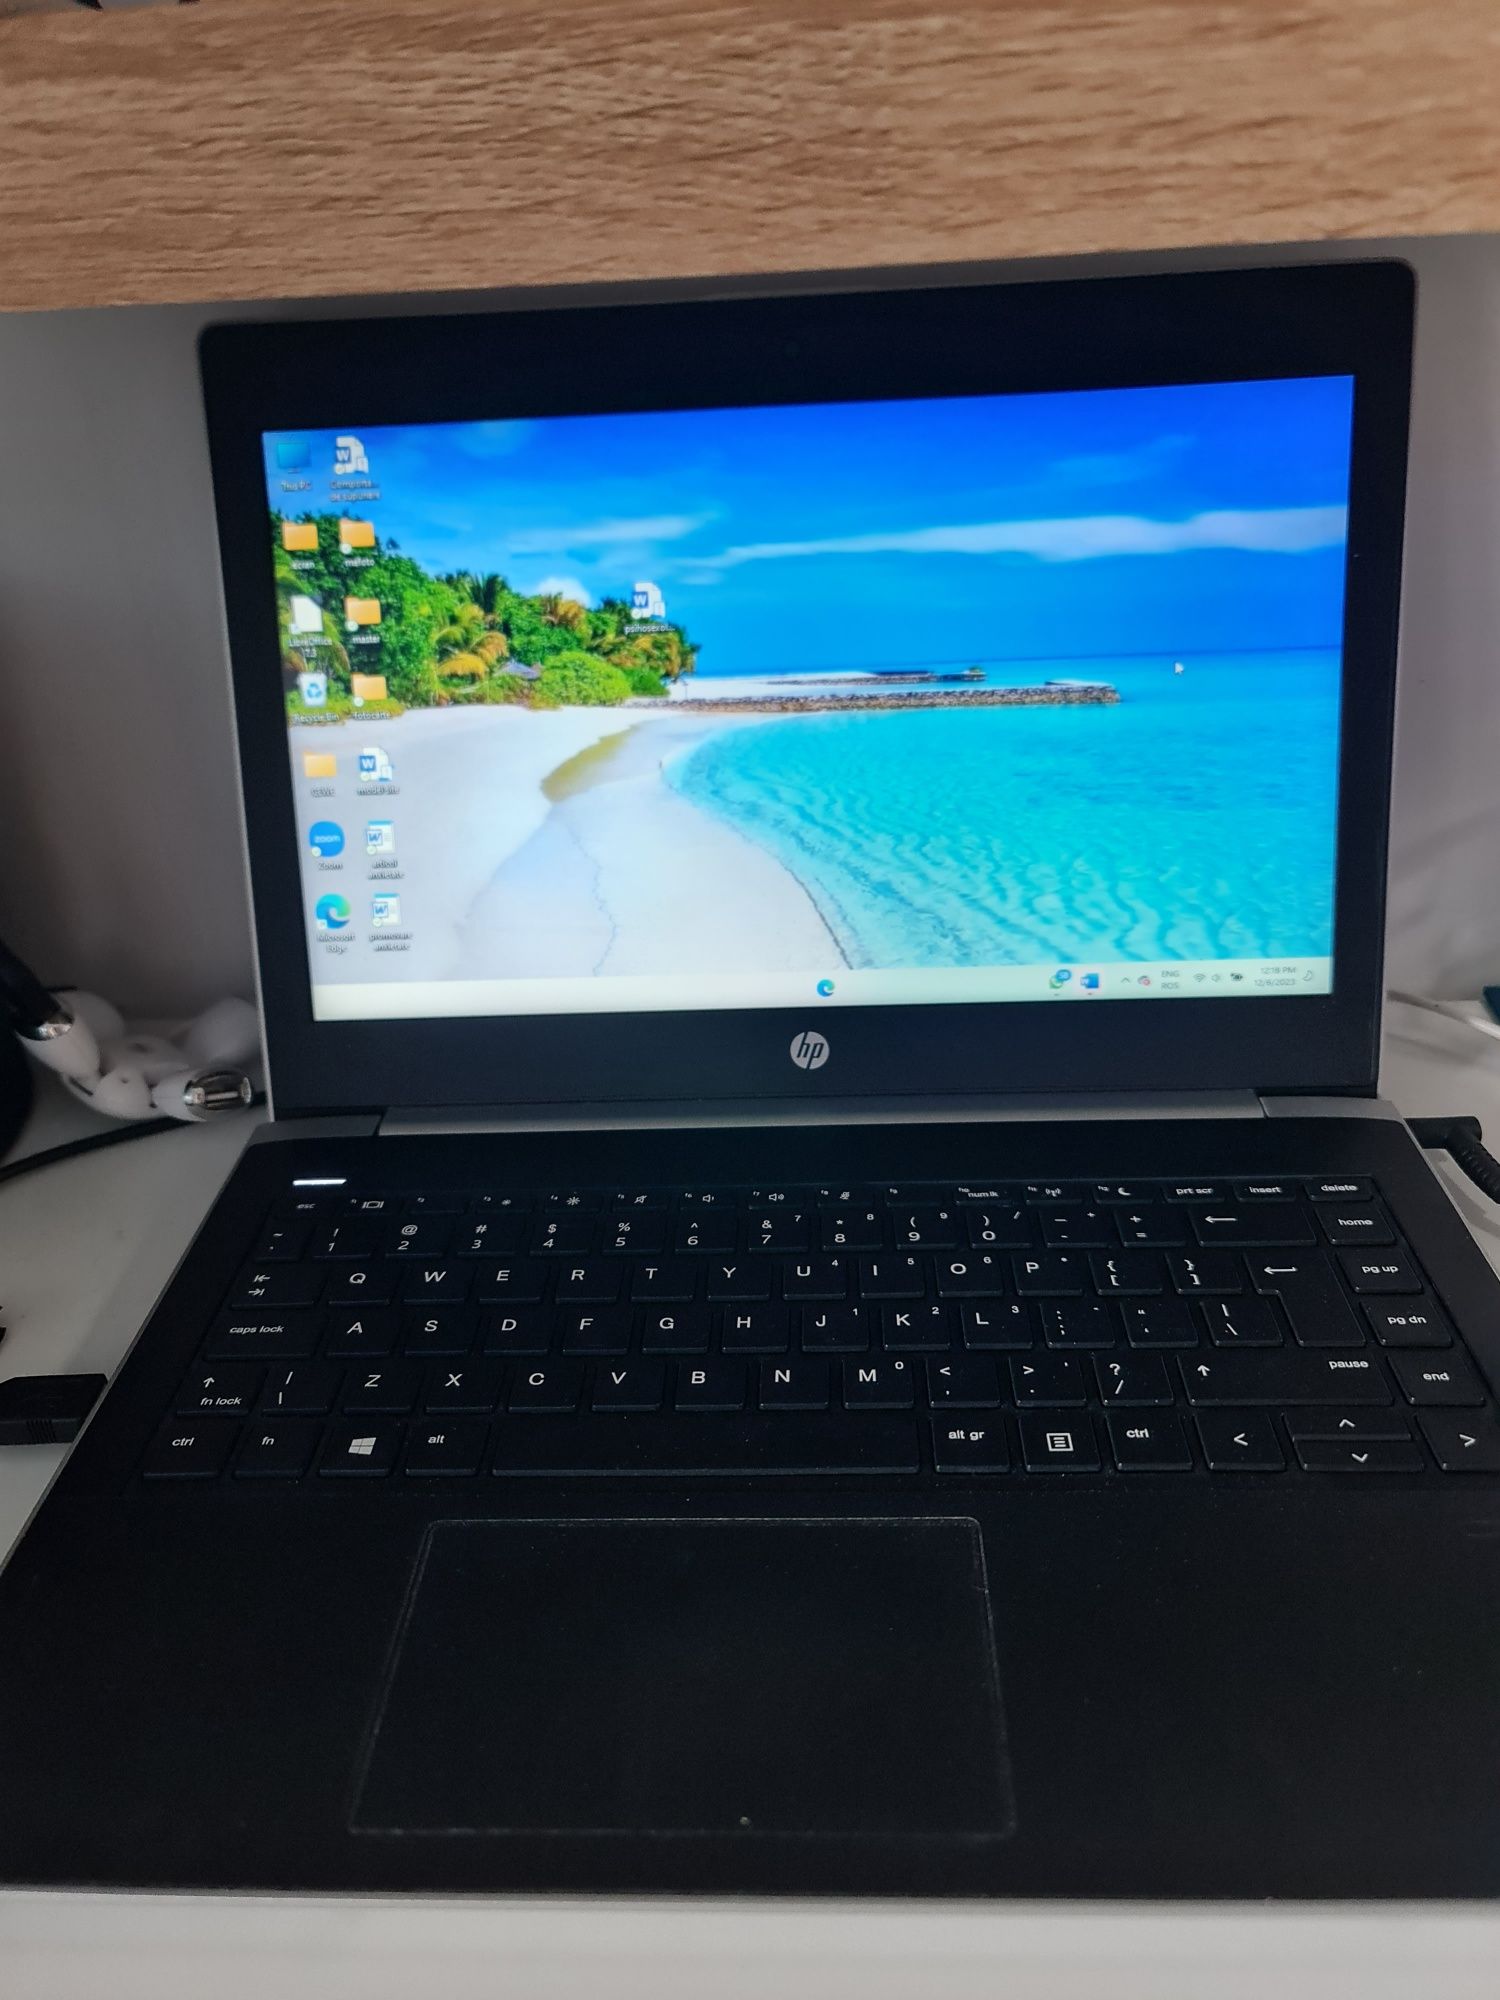 Laptop HP Pro Book 430 G5 i3 4gb DDR4 13.3 inch